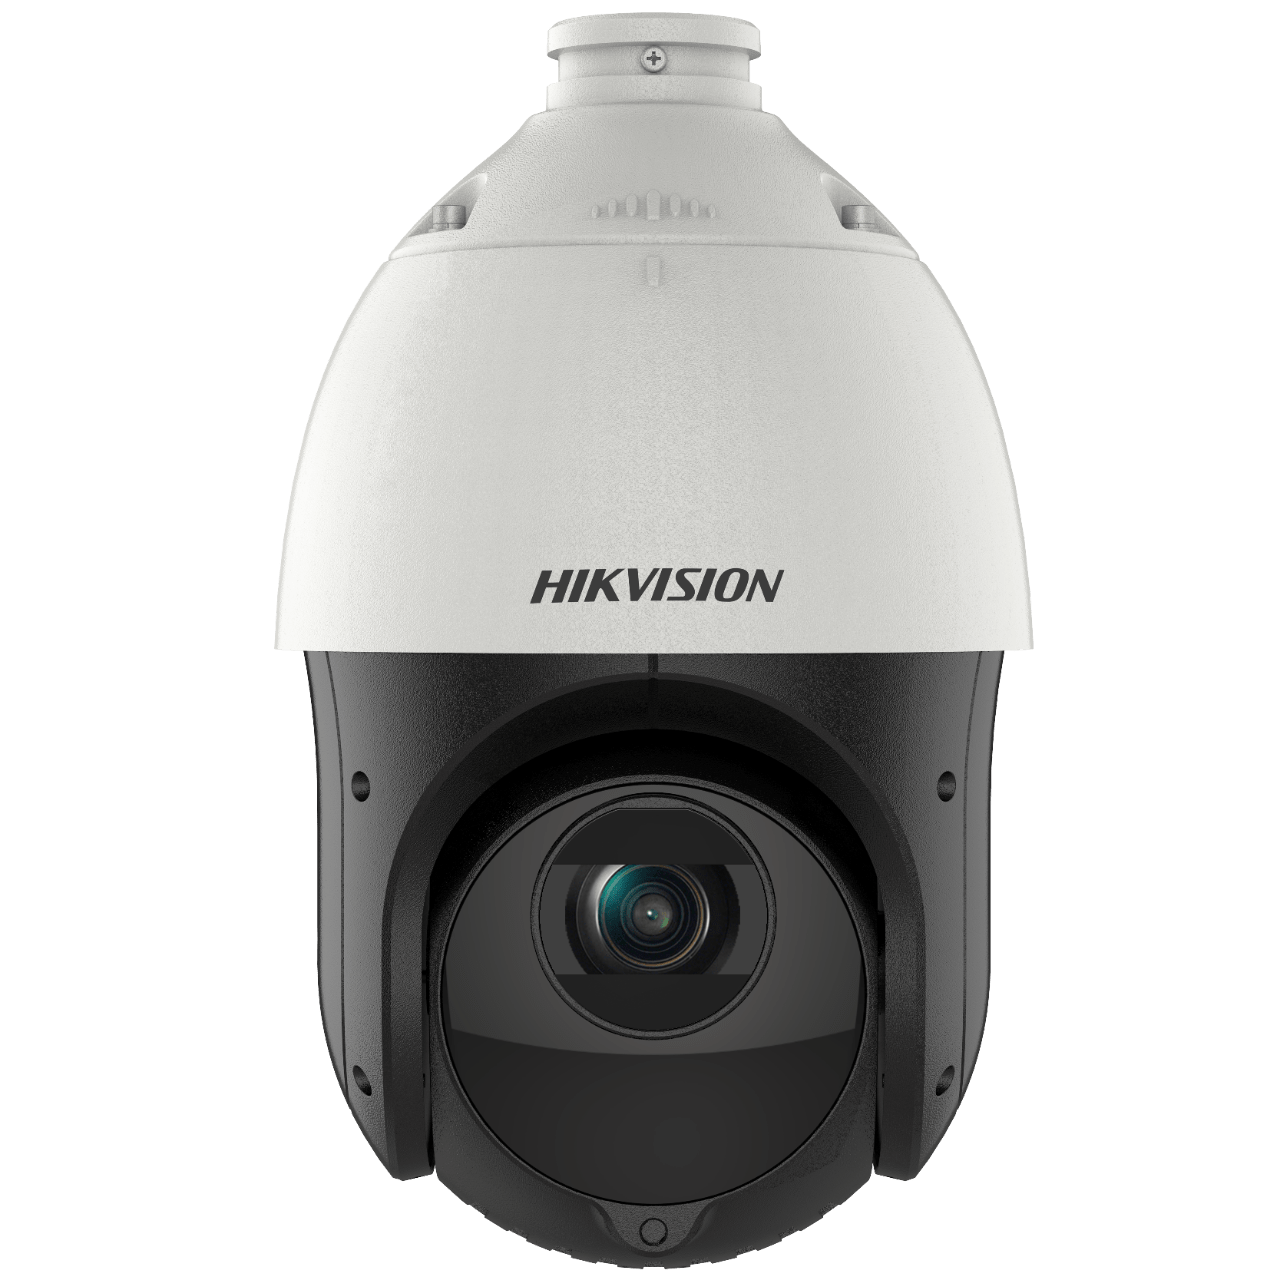 Hikvision CCTV Security Camera Installation in Dubai